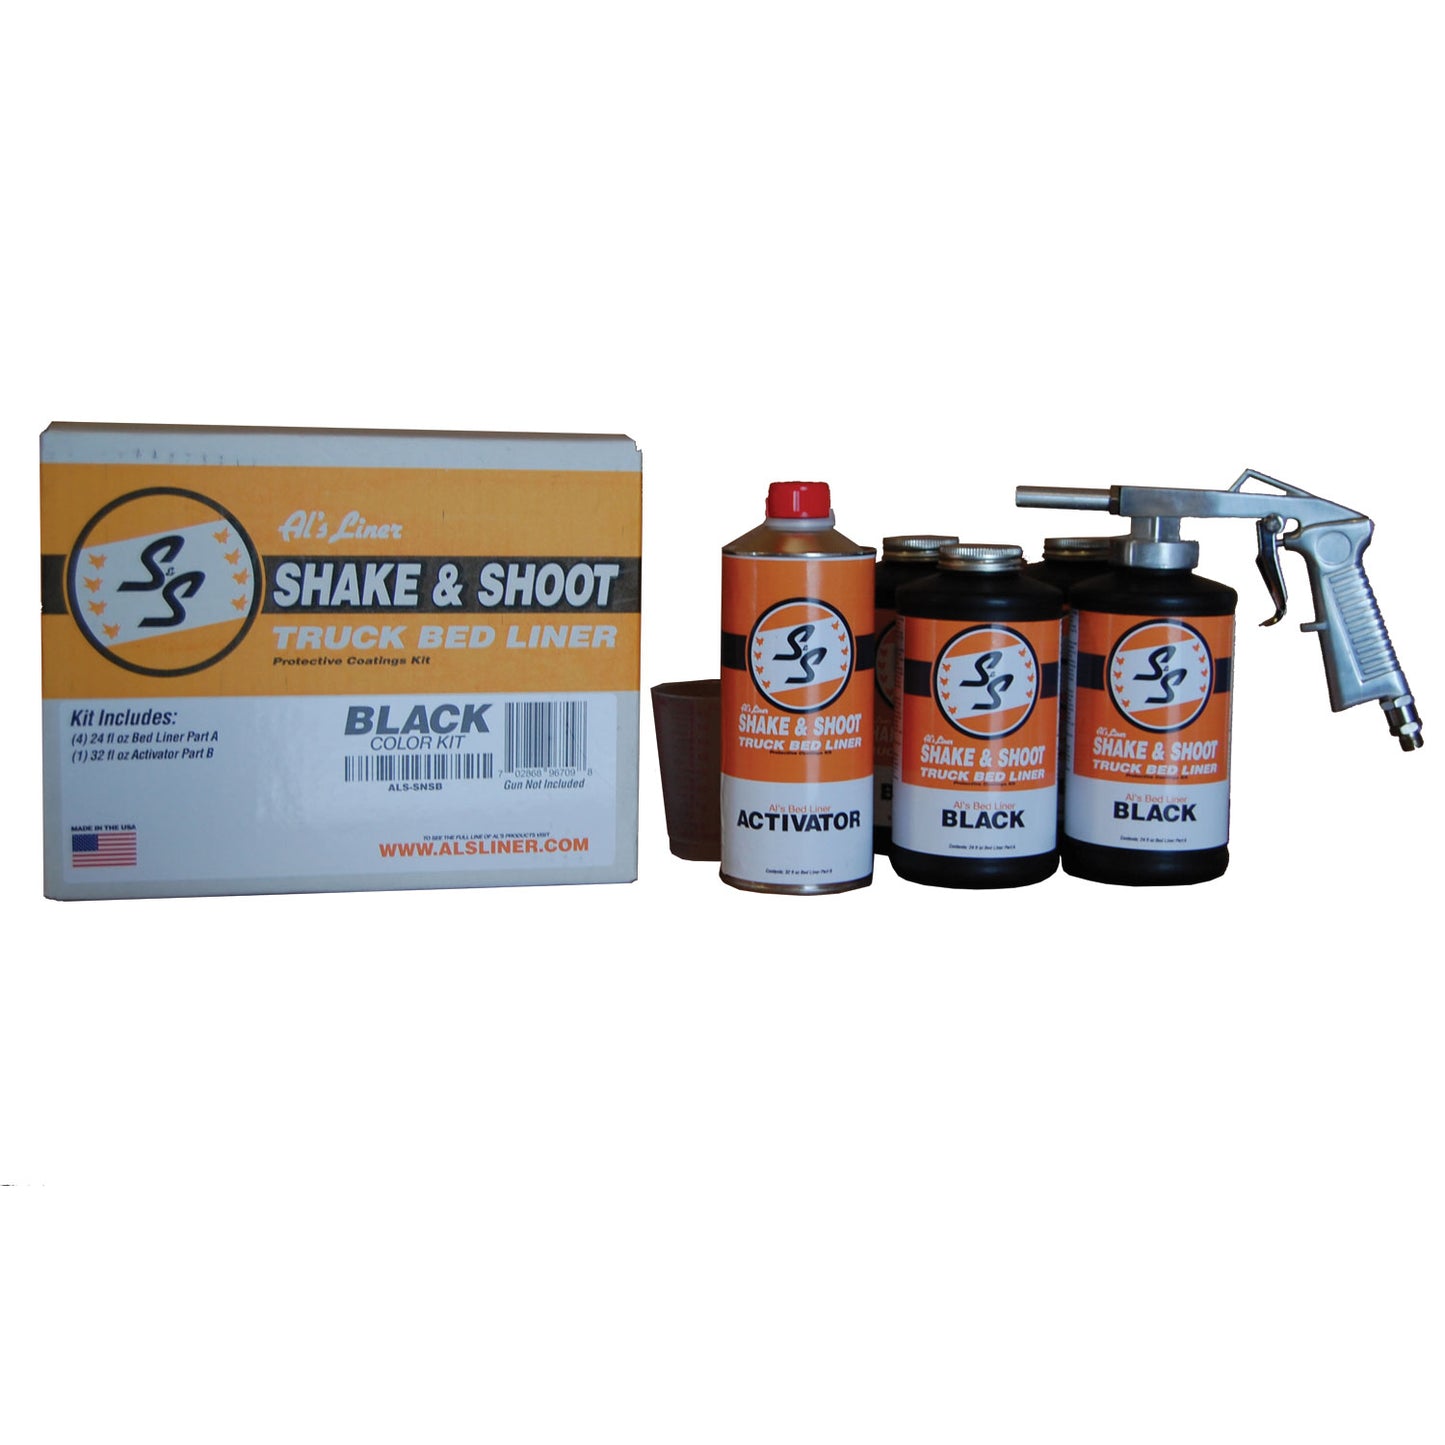 Shake & Shoot Black 4 Quart Truck Bed Liner Kit w/ Applicator Gun